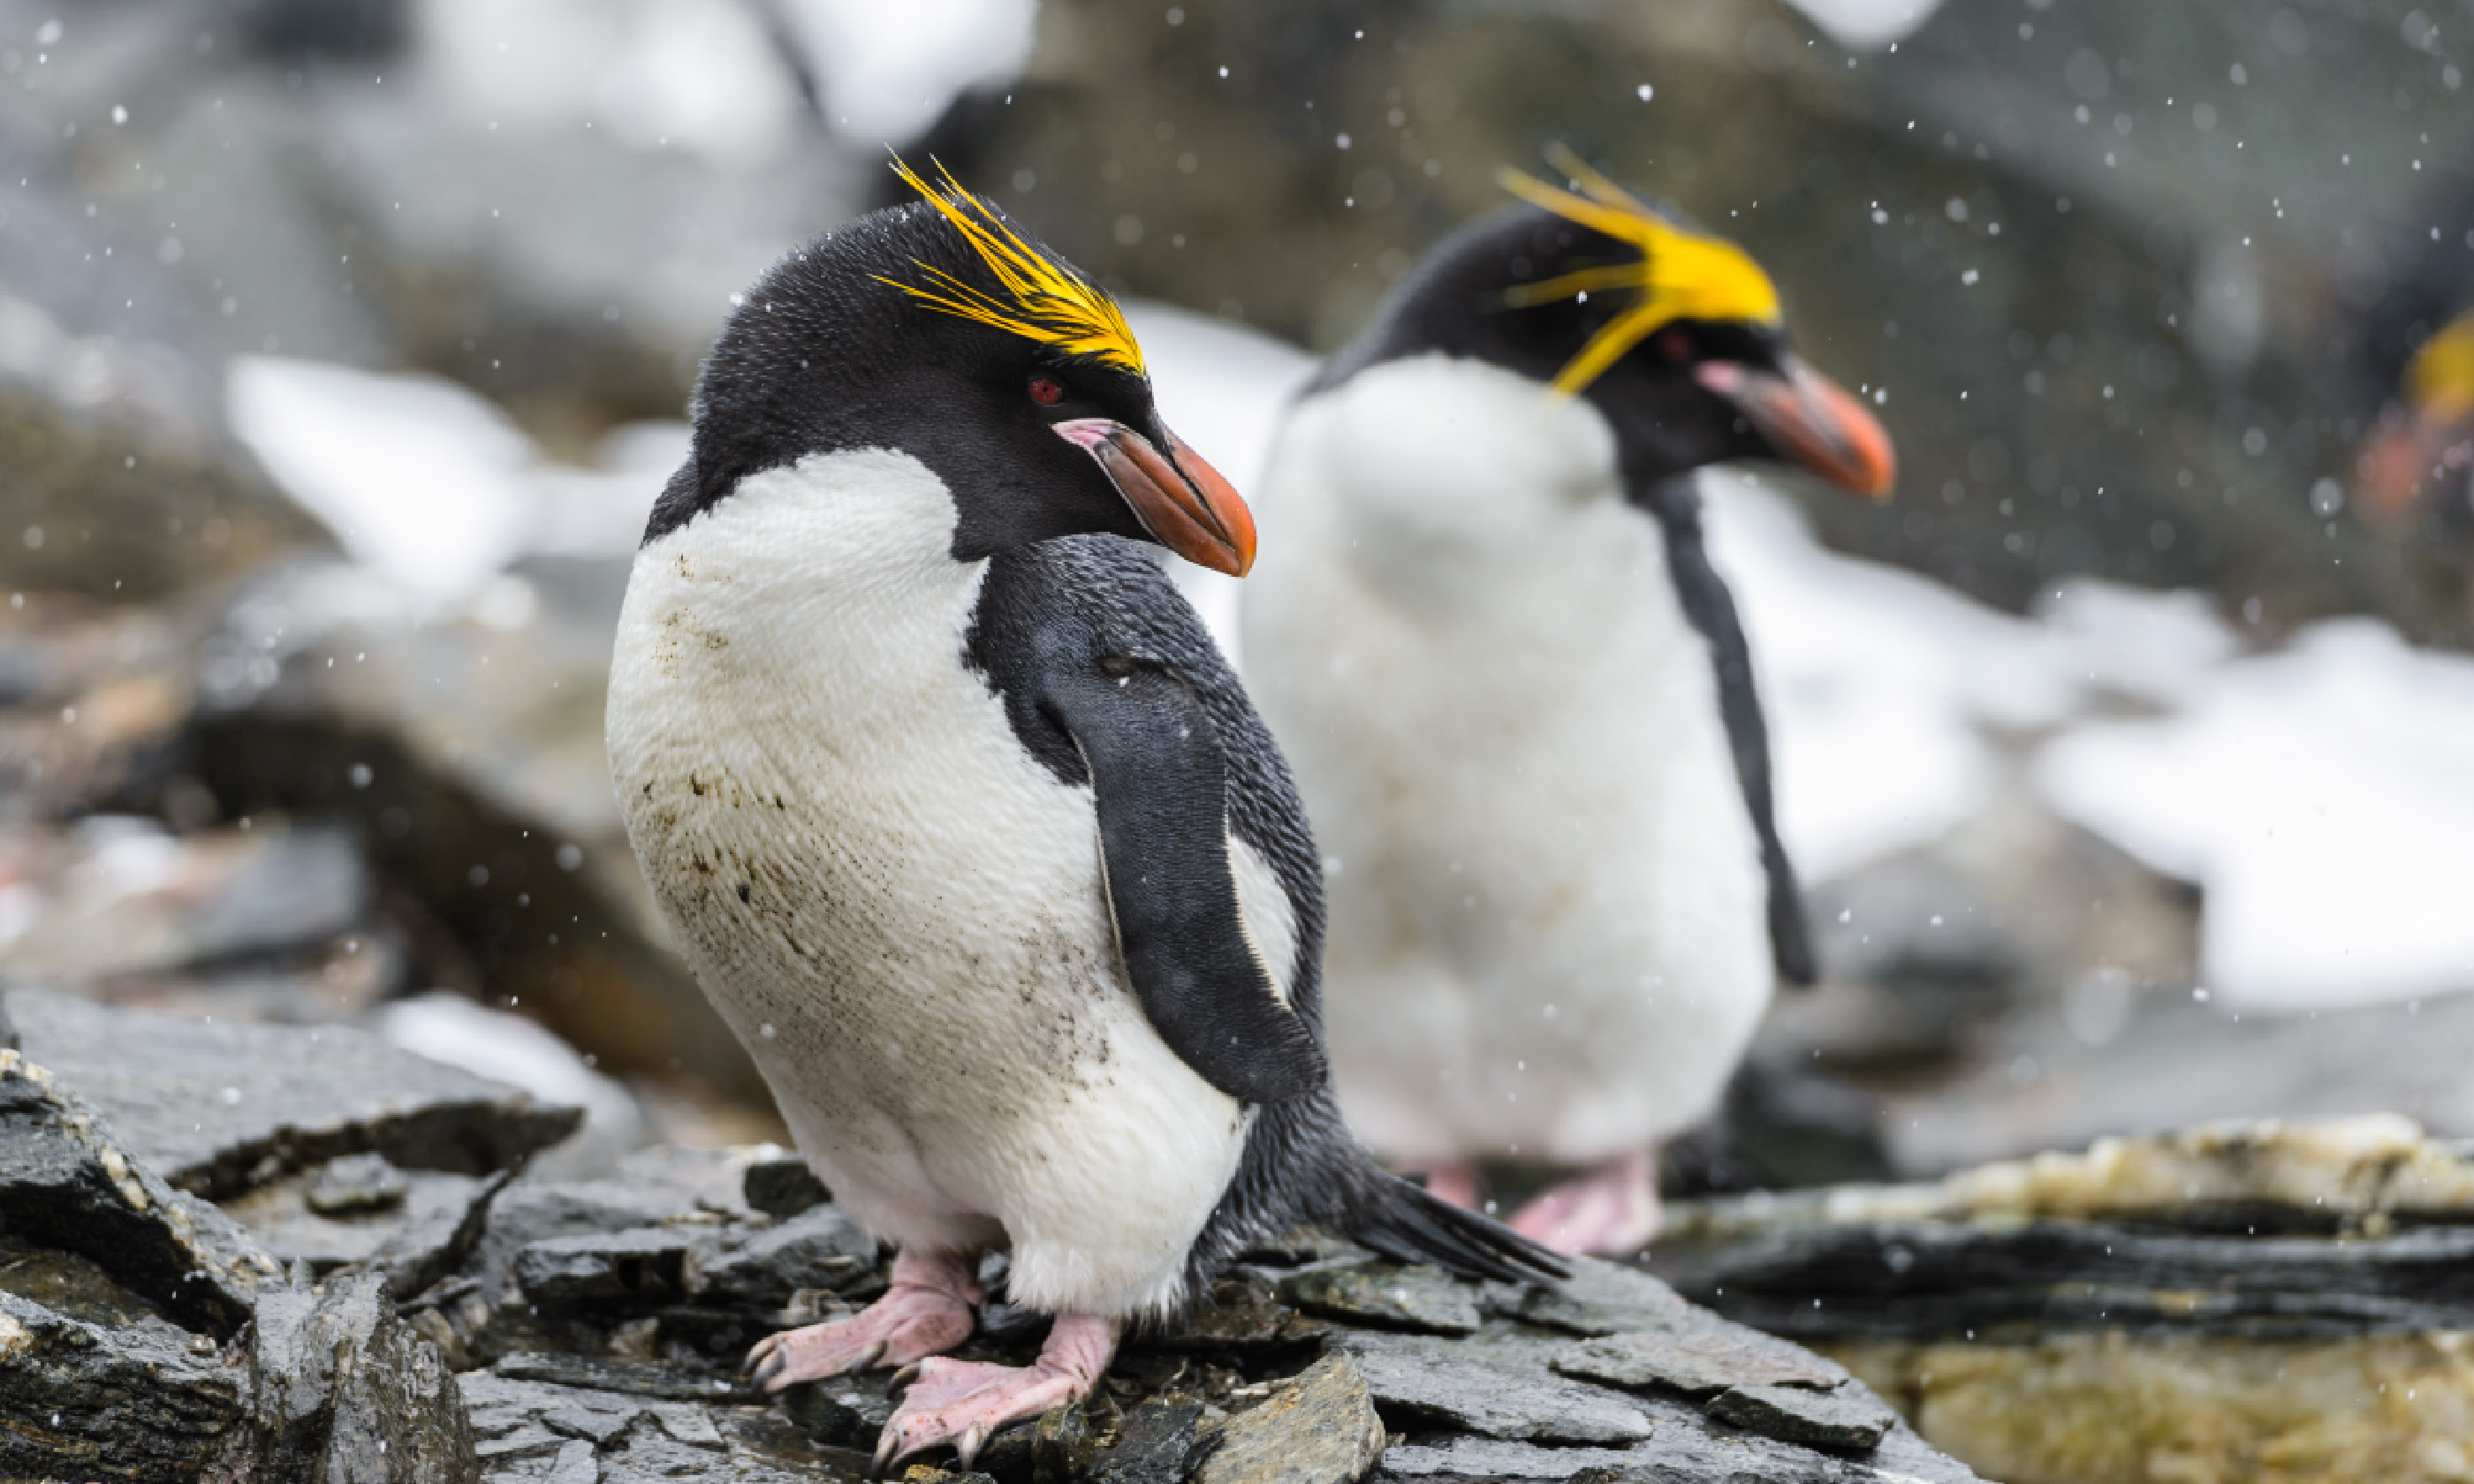 Macaroni penguins (Shutterstock)